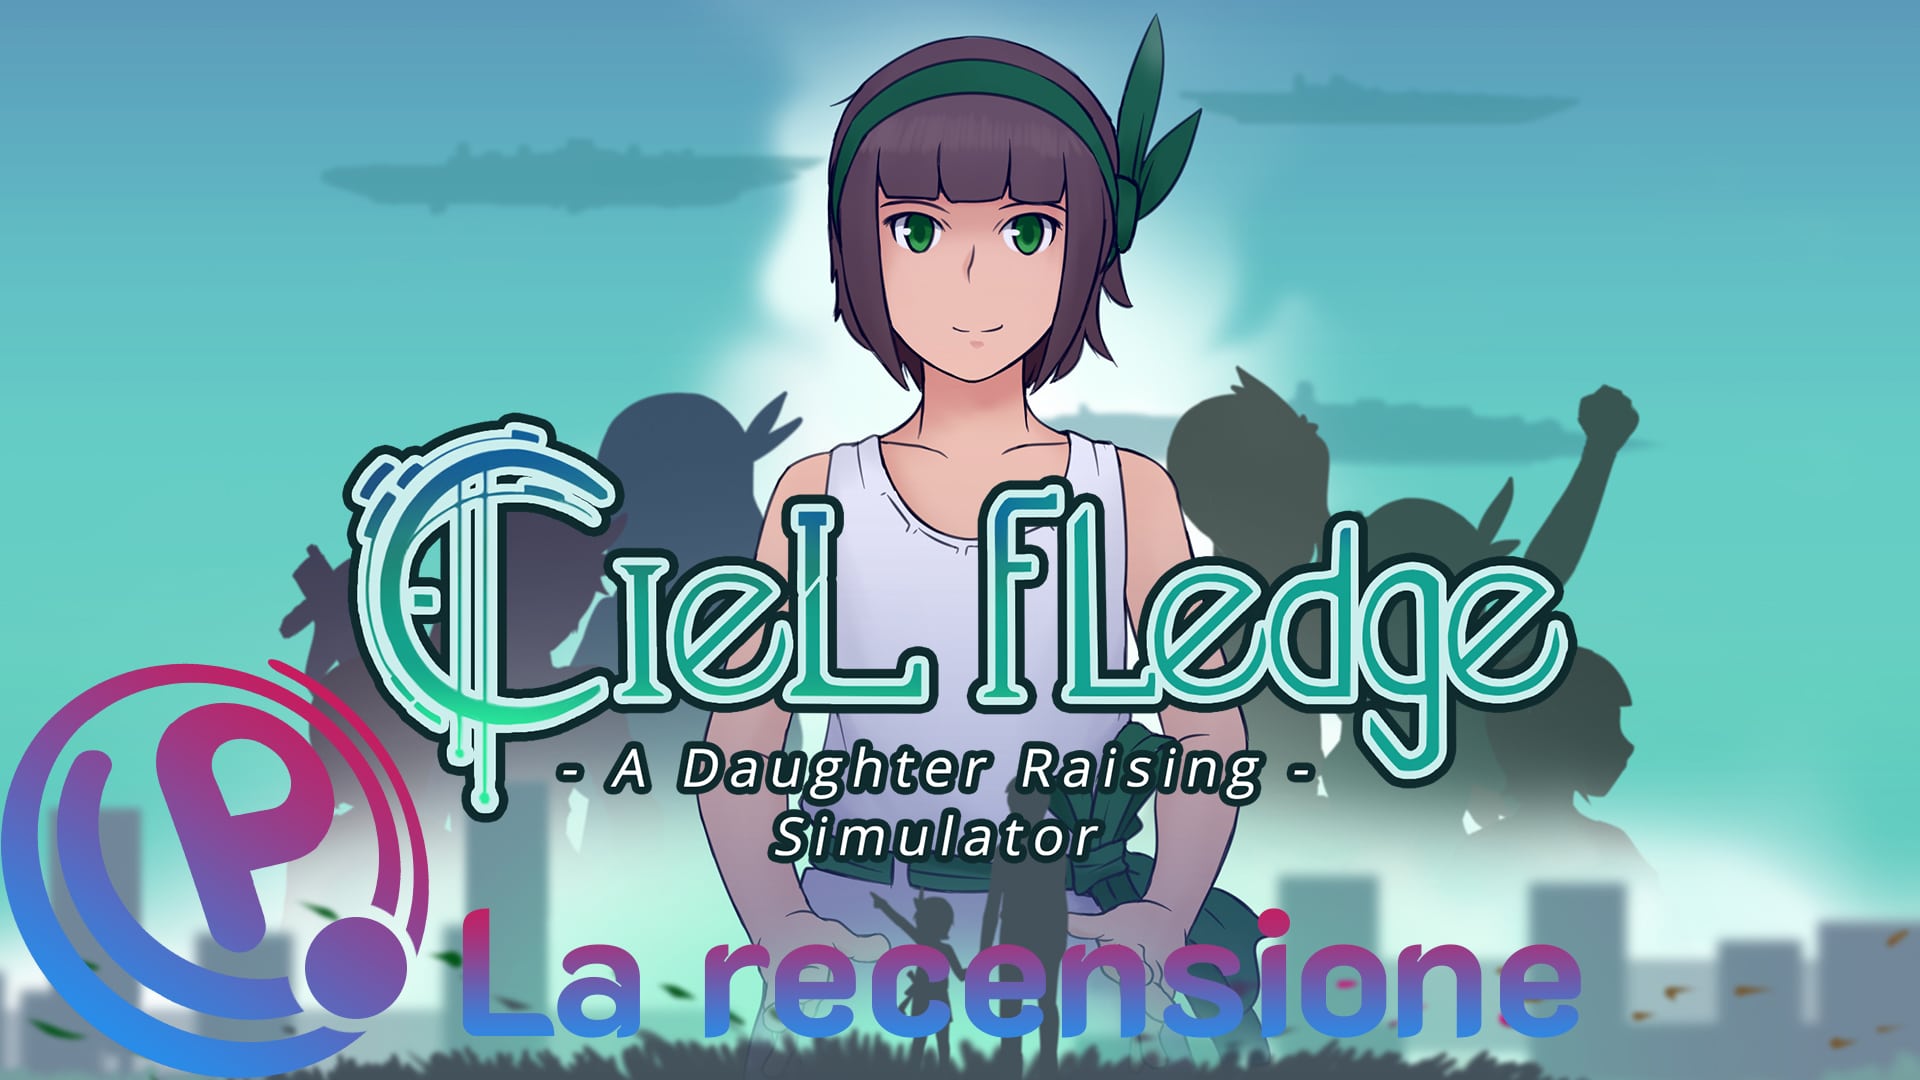 Ciel Fledge: A Daughter Raising Simulator la recensione 8